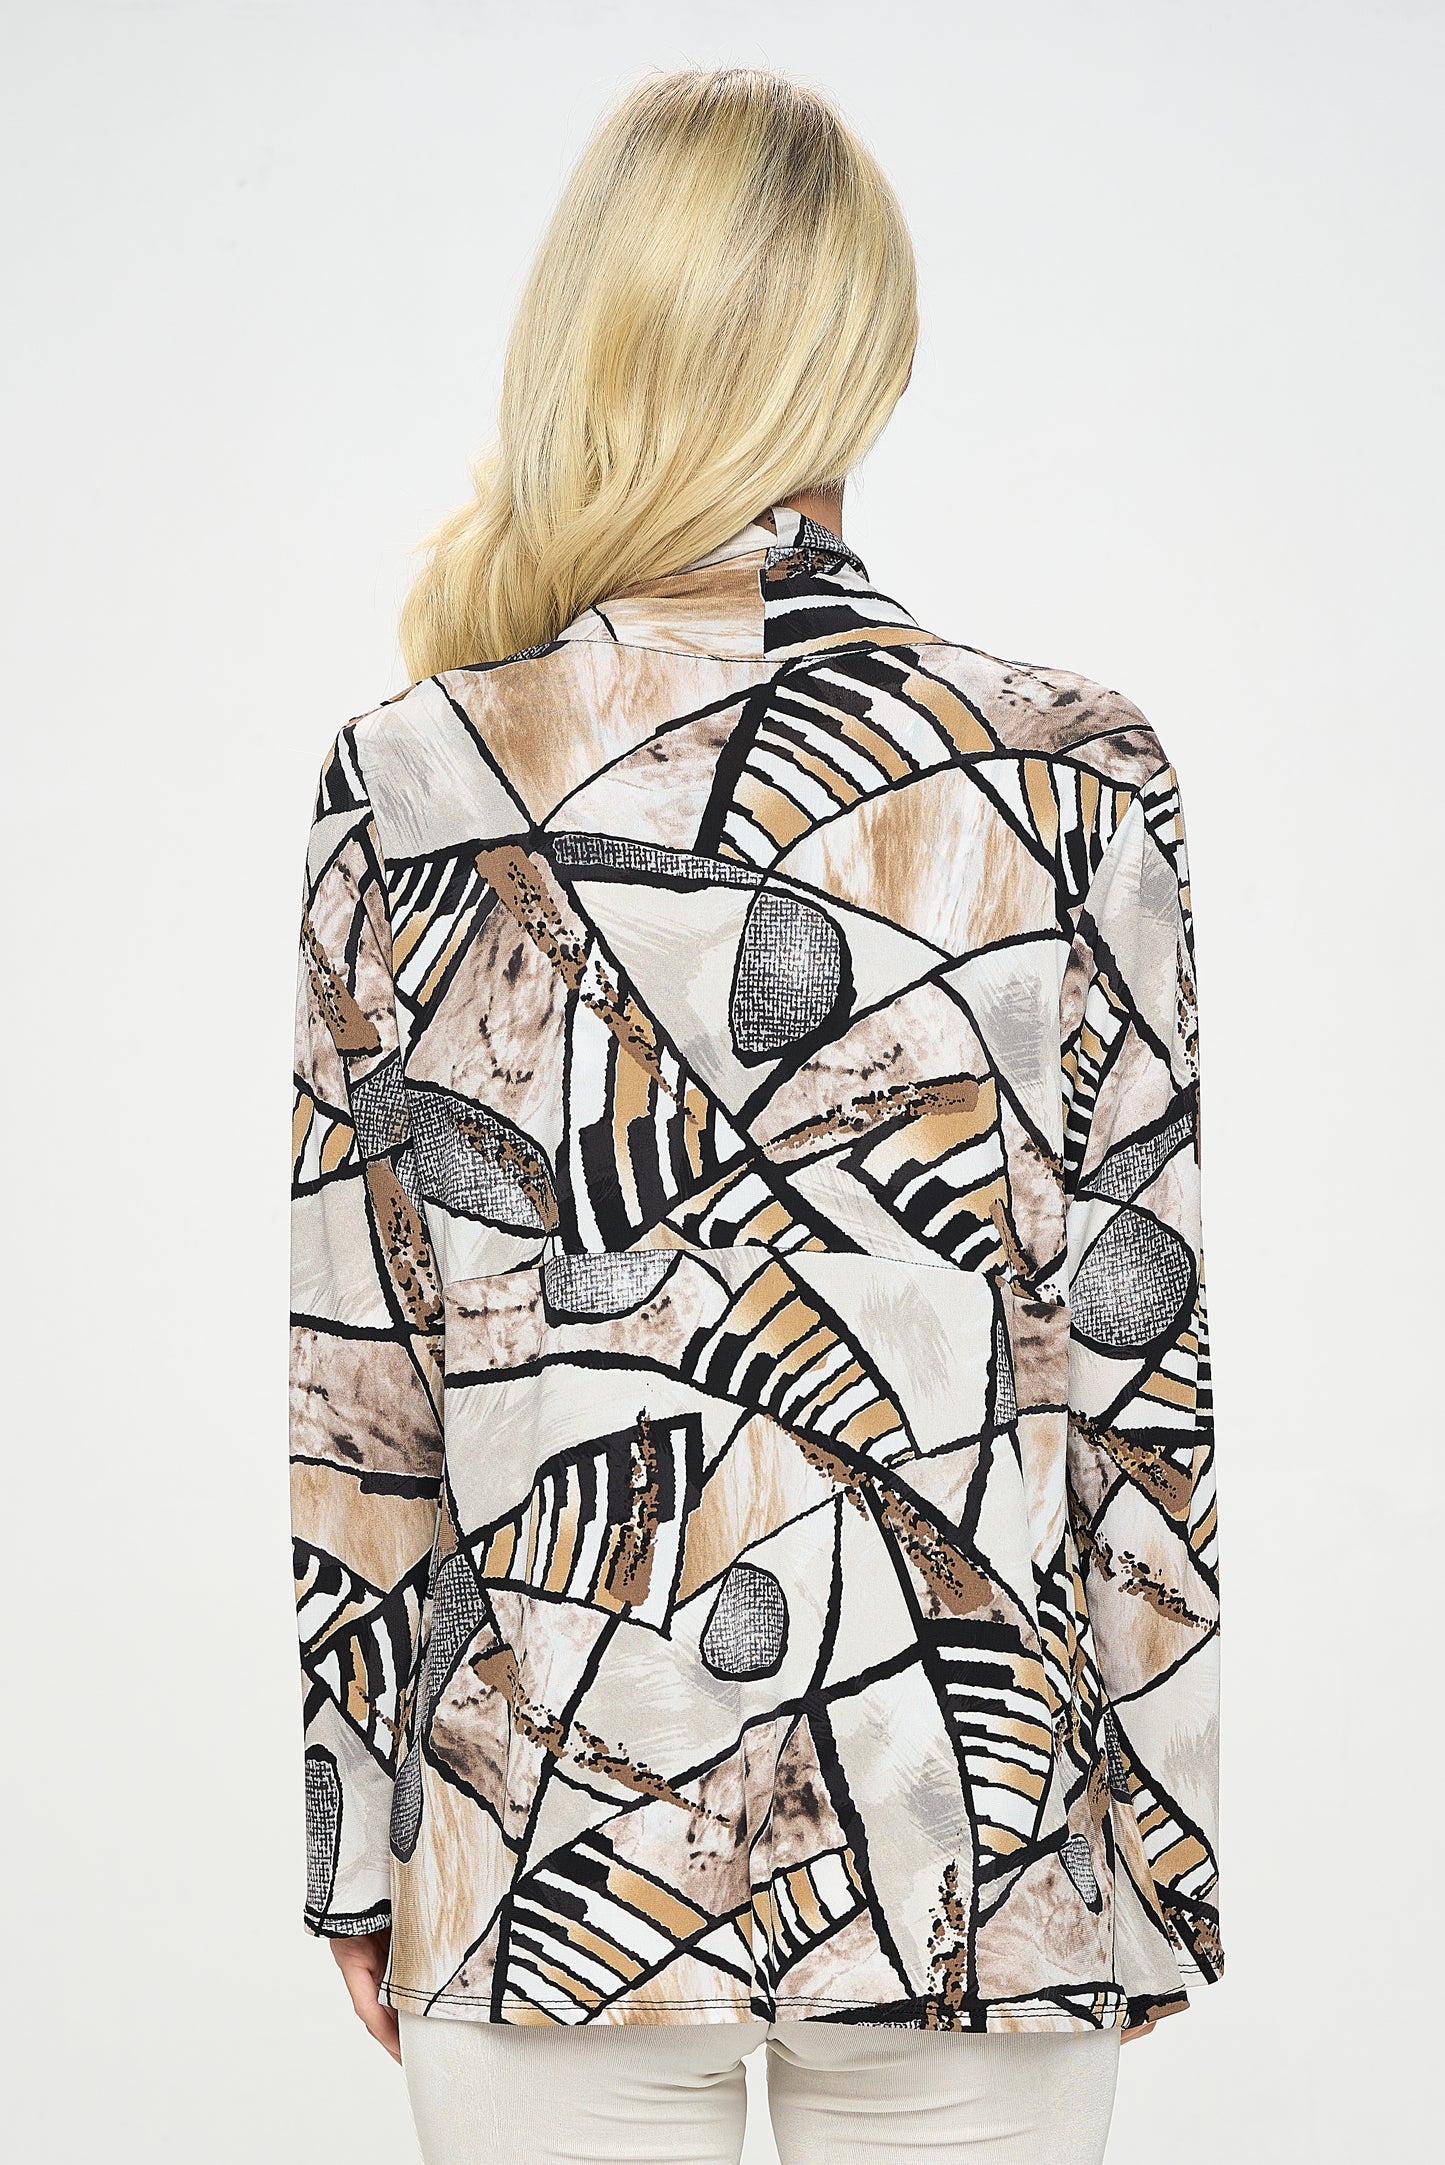 Mid-cut Jacket Long Sleeve Print-4028HT-LRP1-W393